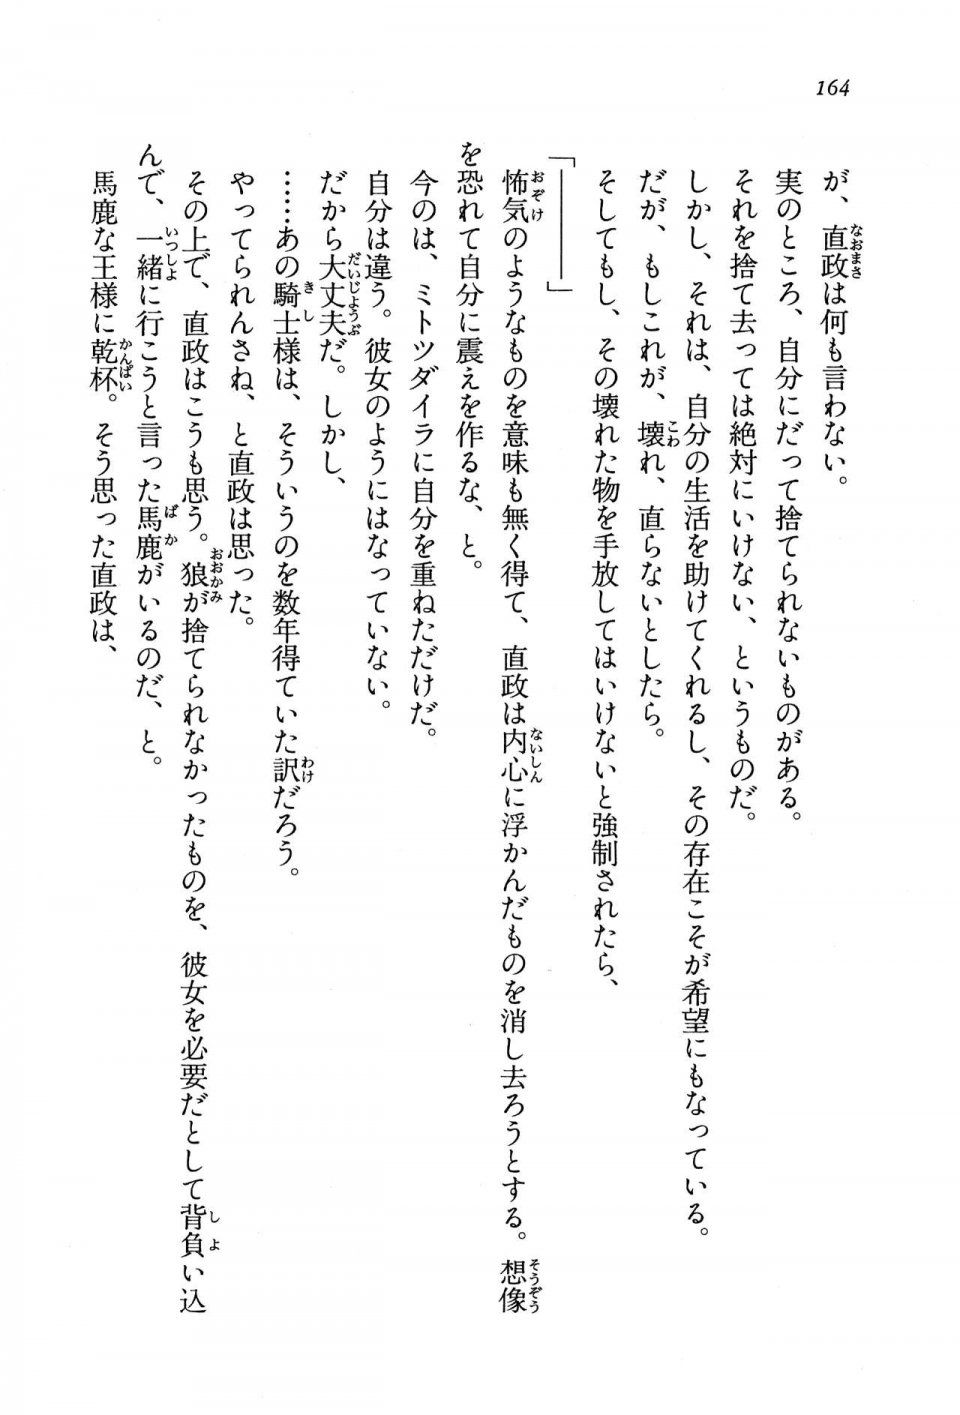 Kyoukai Senjou no Horizon BD Special Mininovel Vol 8(4B) - Photo #168